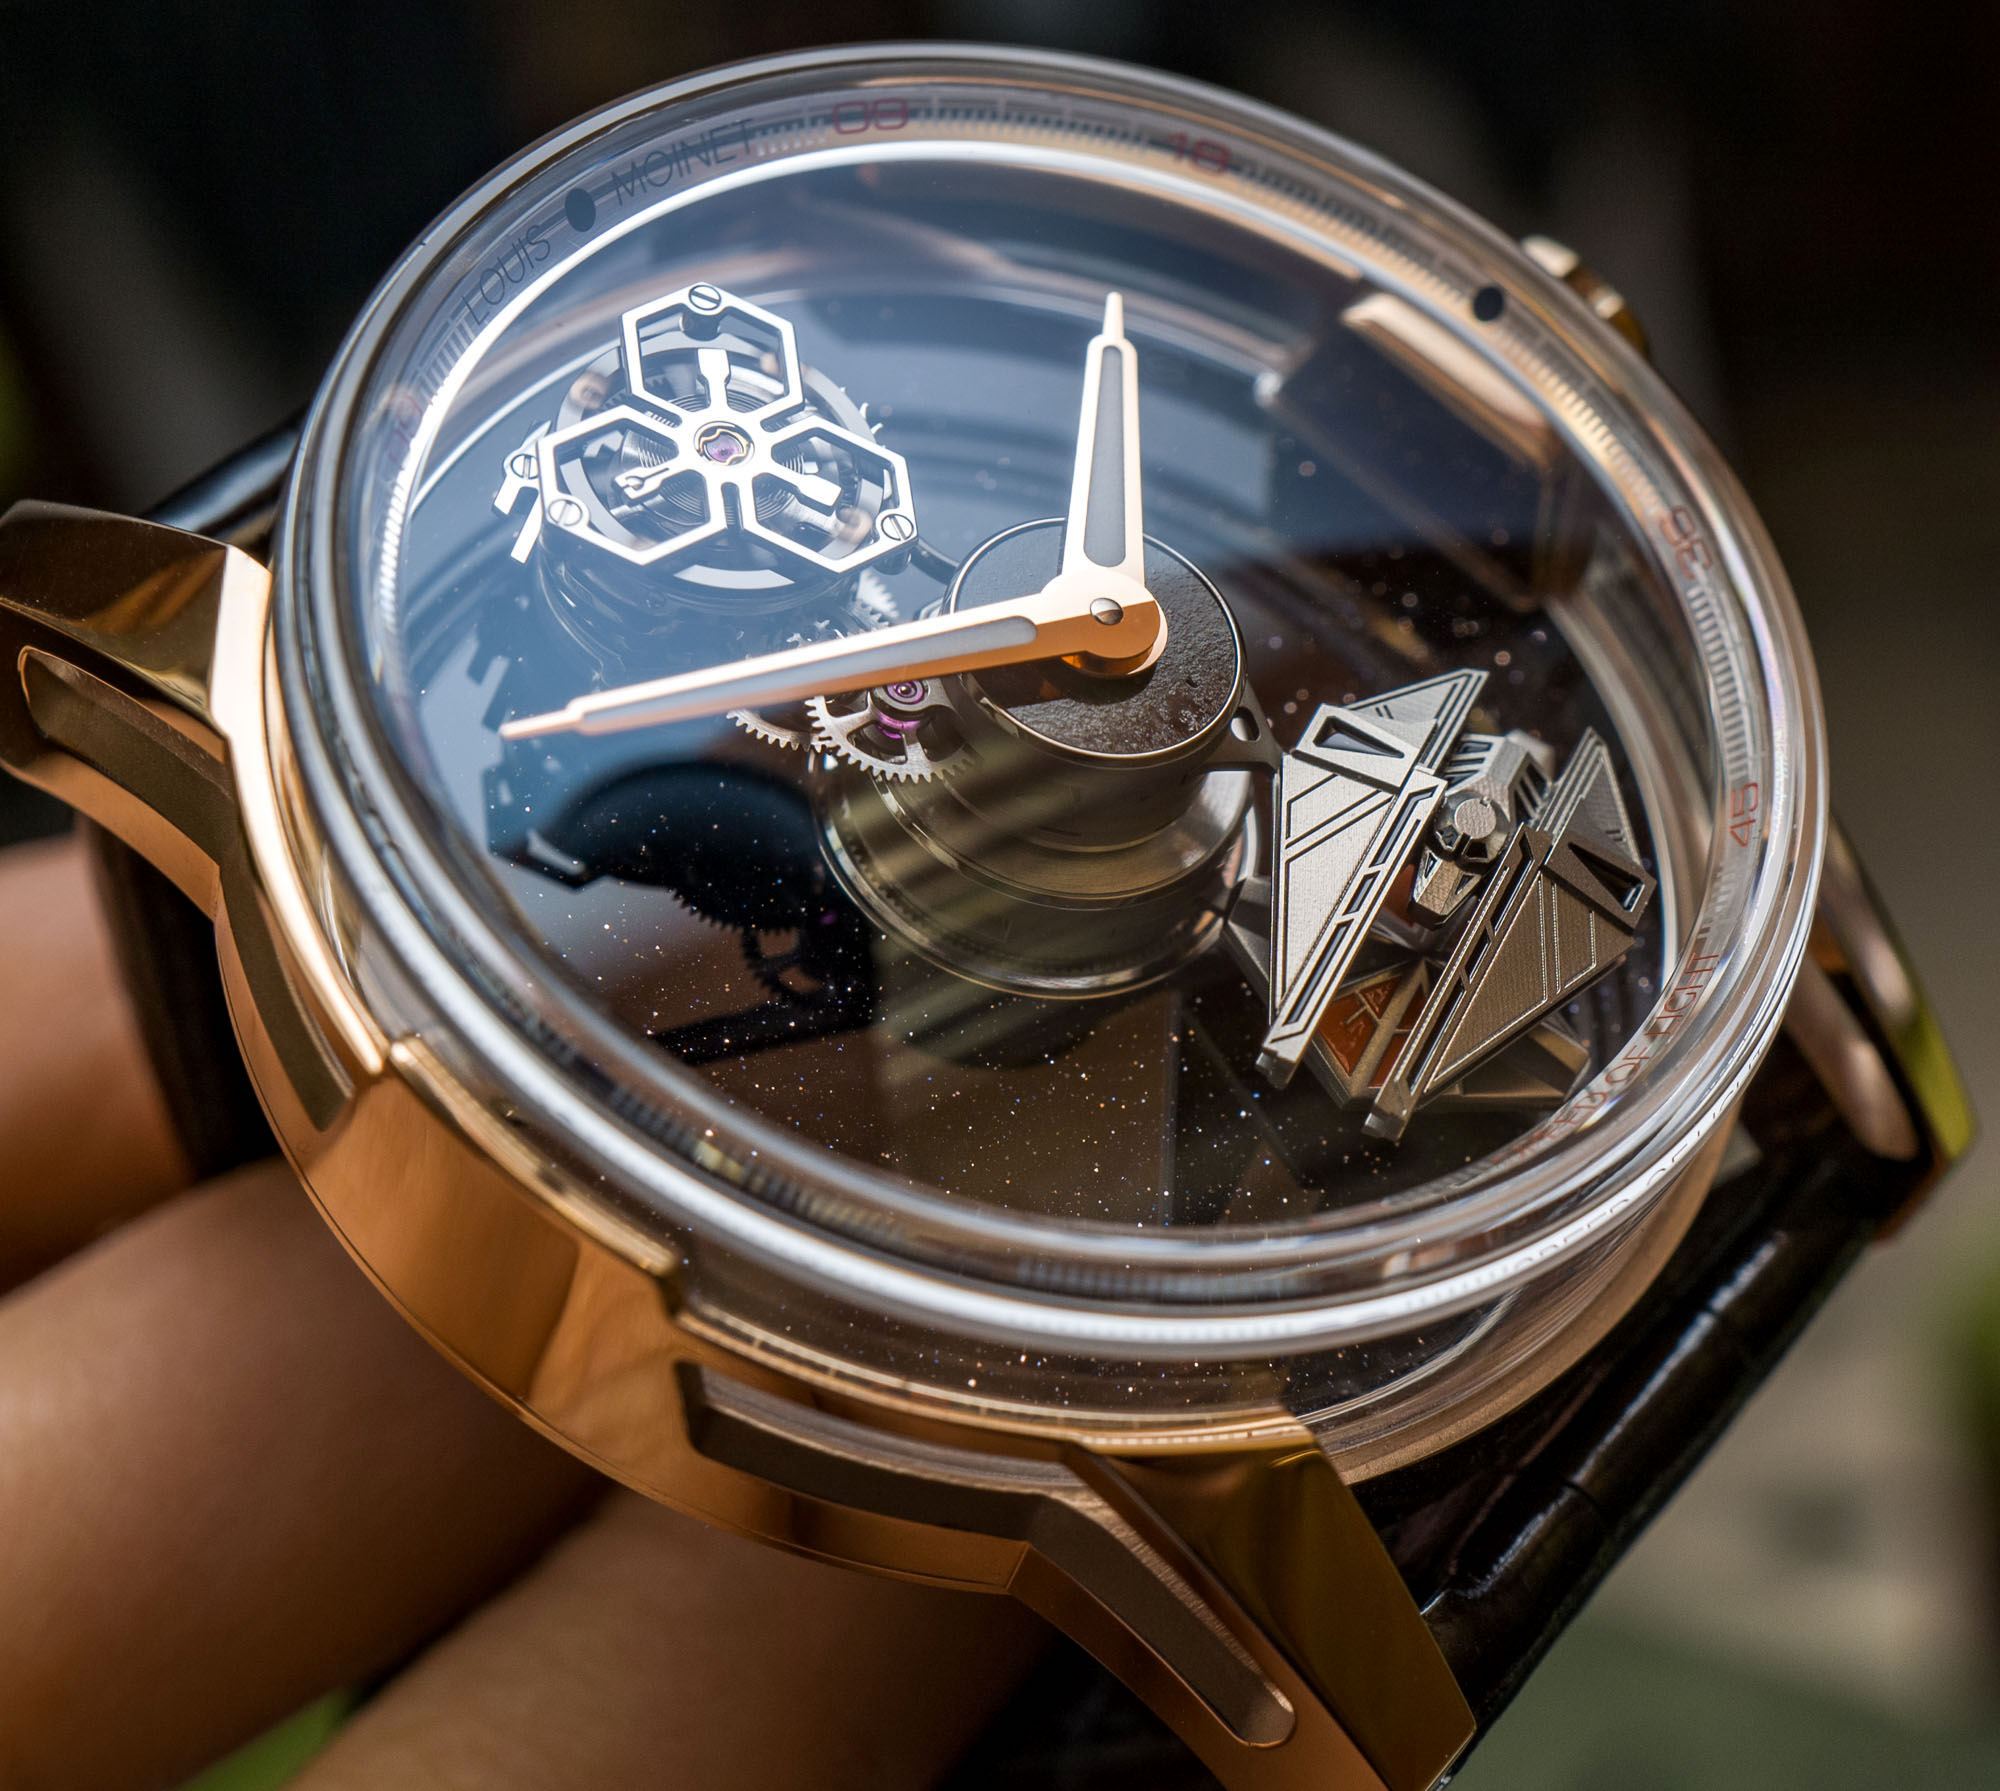 Louis Moinet - independent Swiss watch brand